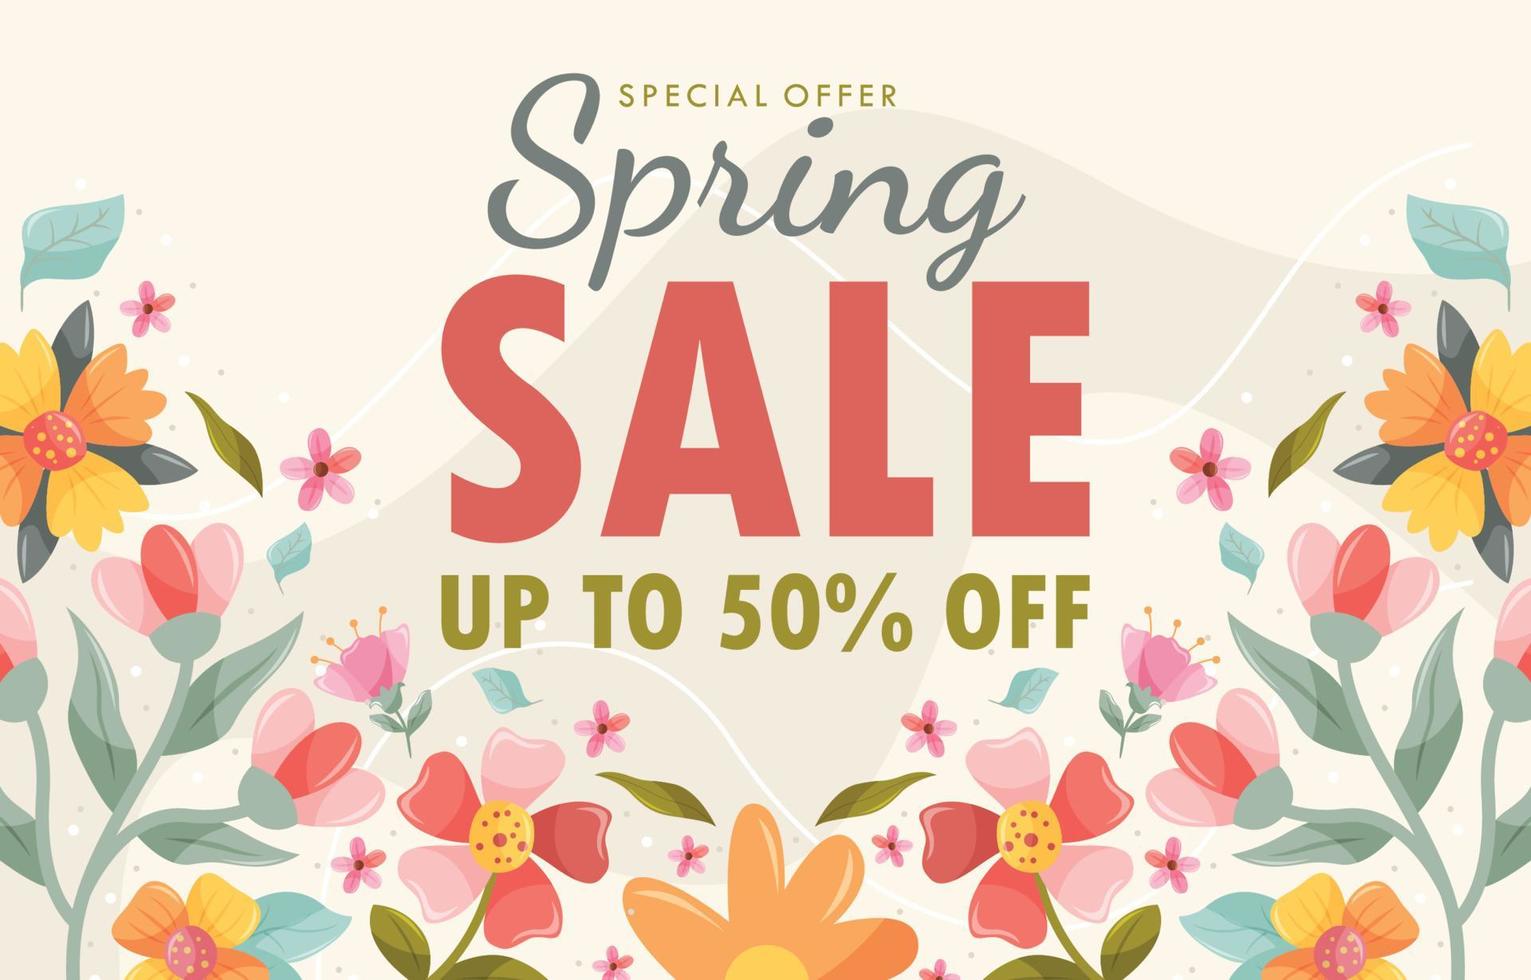 Floral Spring Marketing Background vector